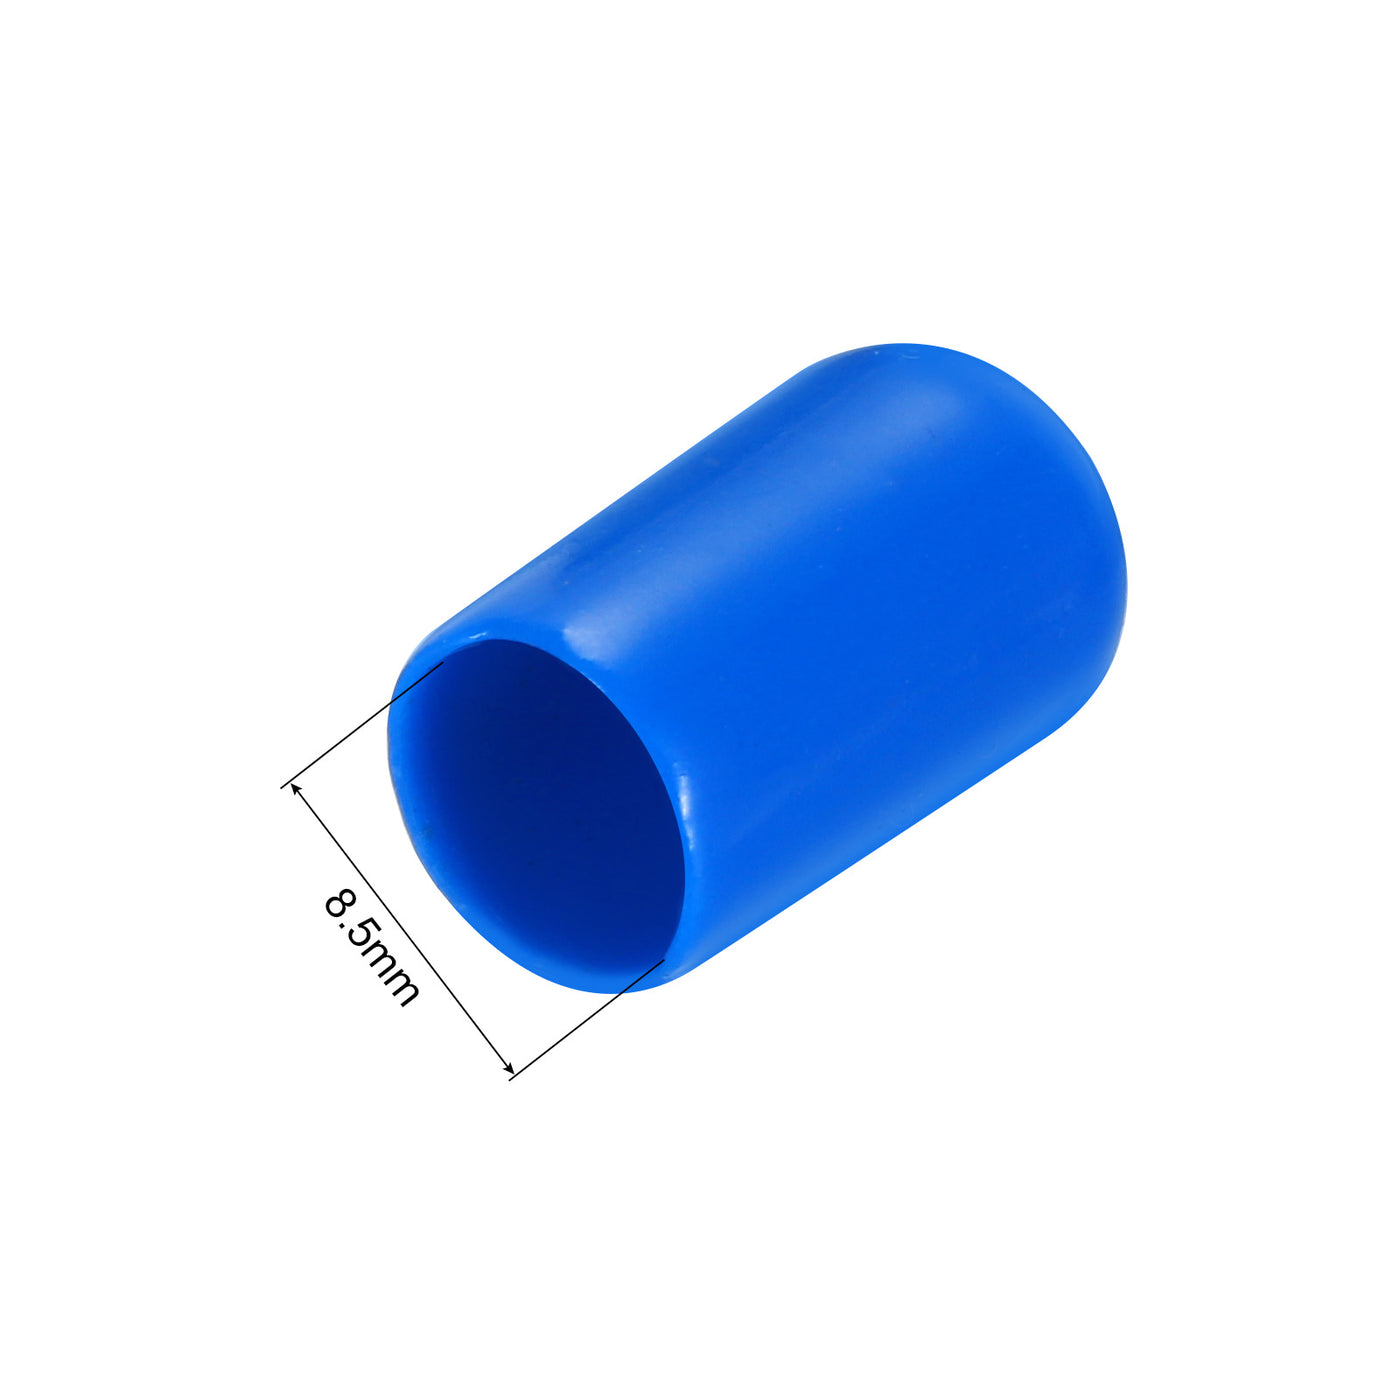 uxcell Uxcell 50pcs Rubber End Caps 8.5mm ID Vinyl PVC Round Tube Bolt Cap Cover Screw Thread Protectors Blue